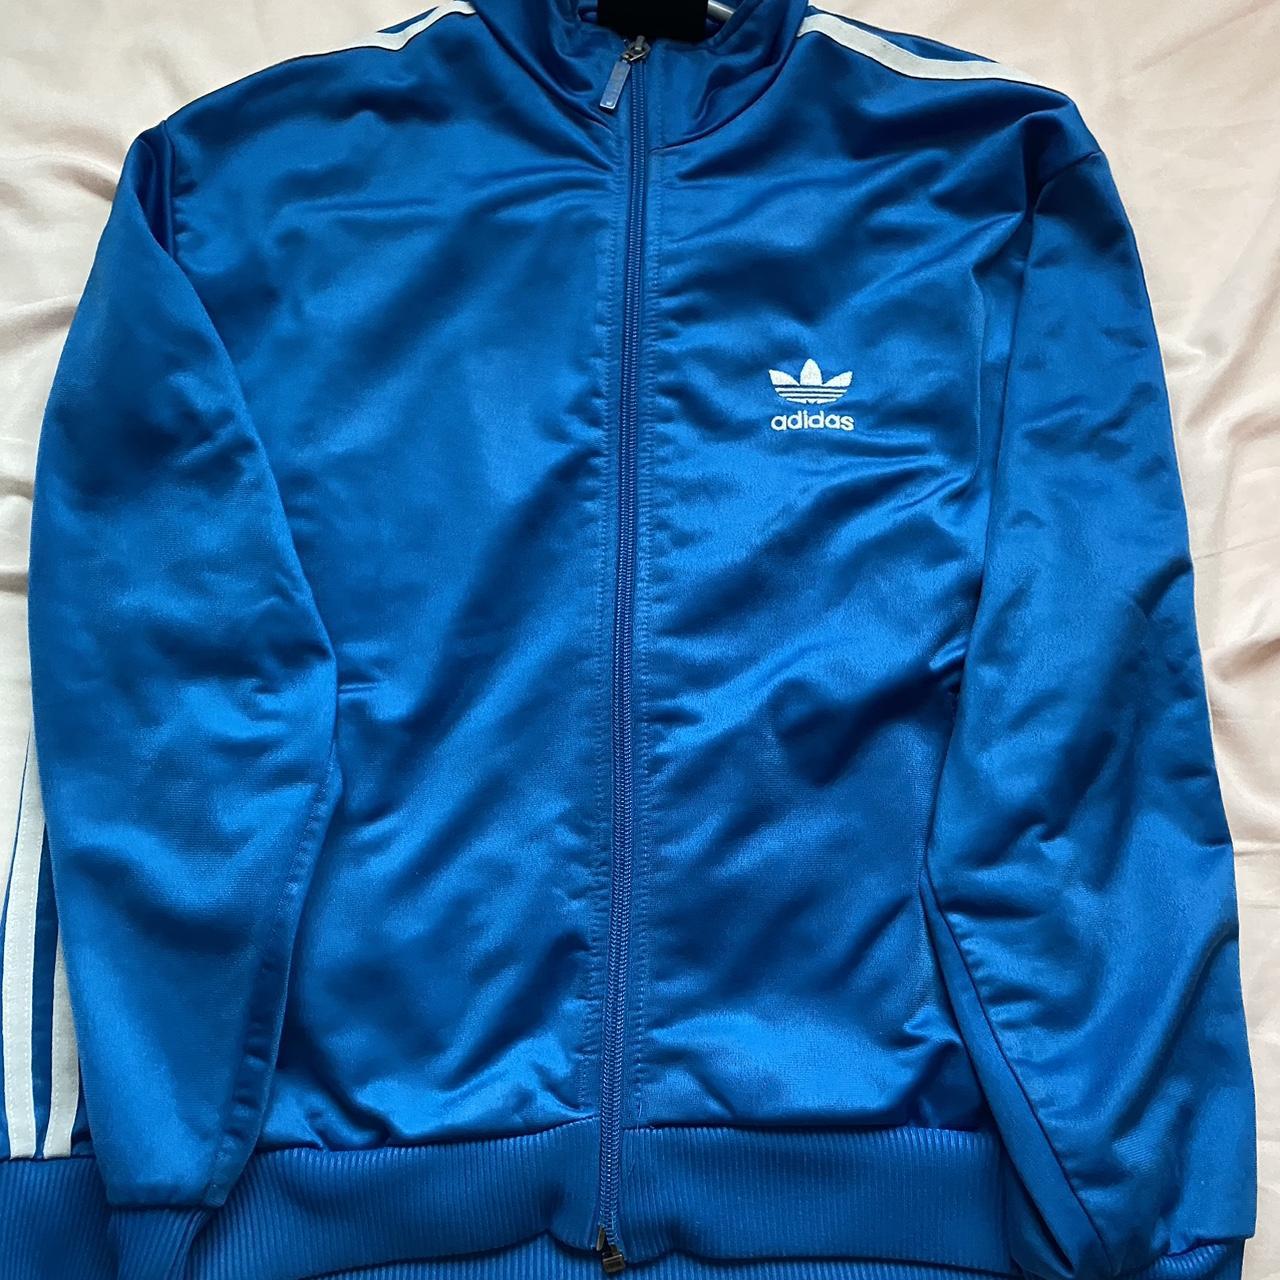 Blue Adidas Zip Up Jacket - Depop